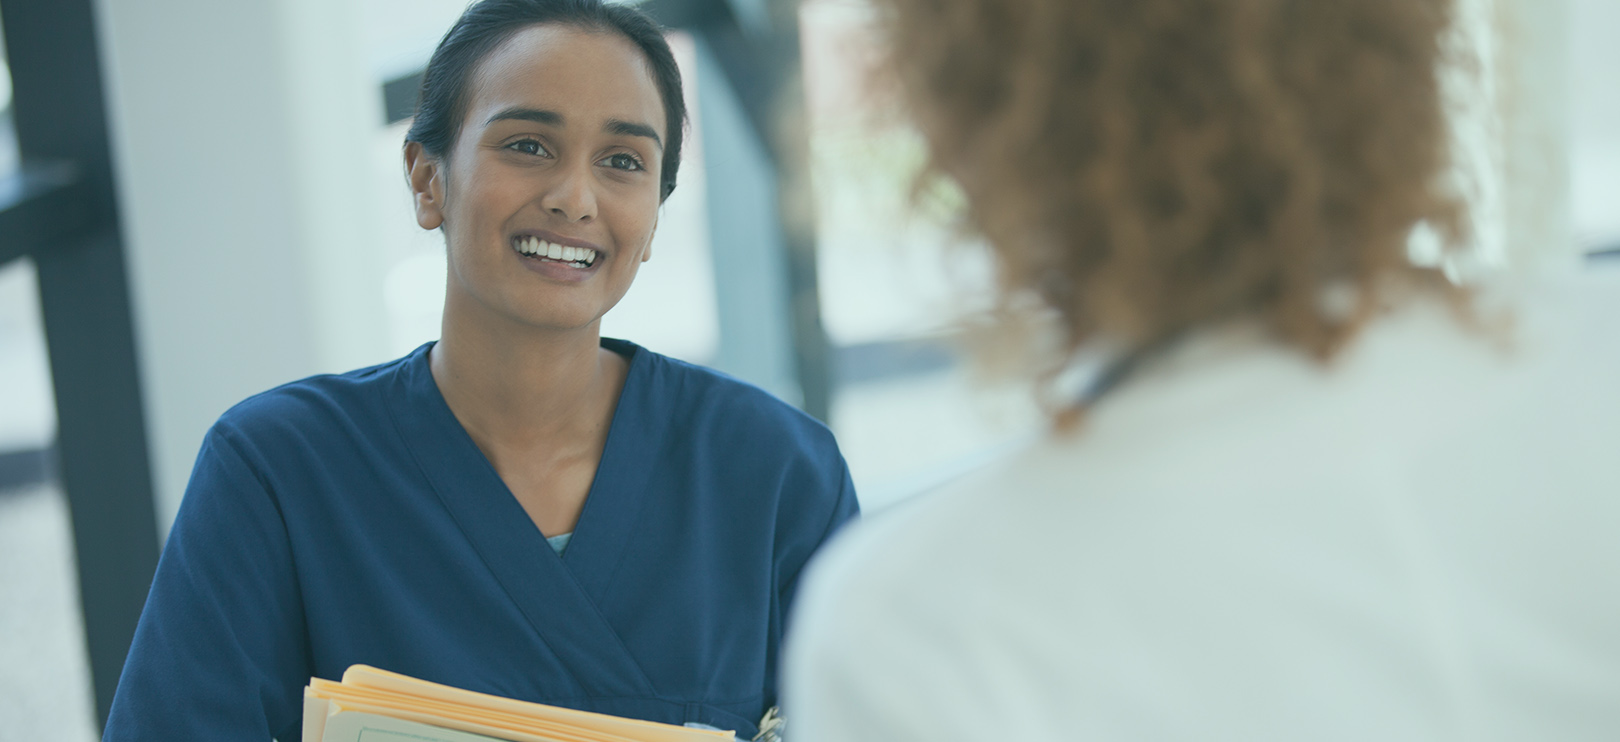 Registered nurse jobs in wisconsin